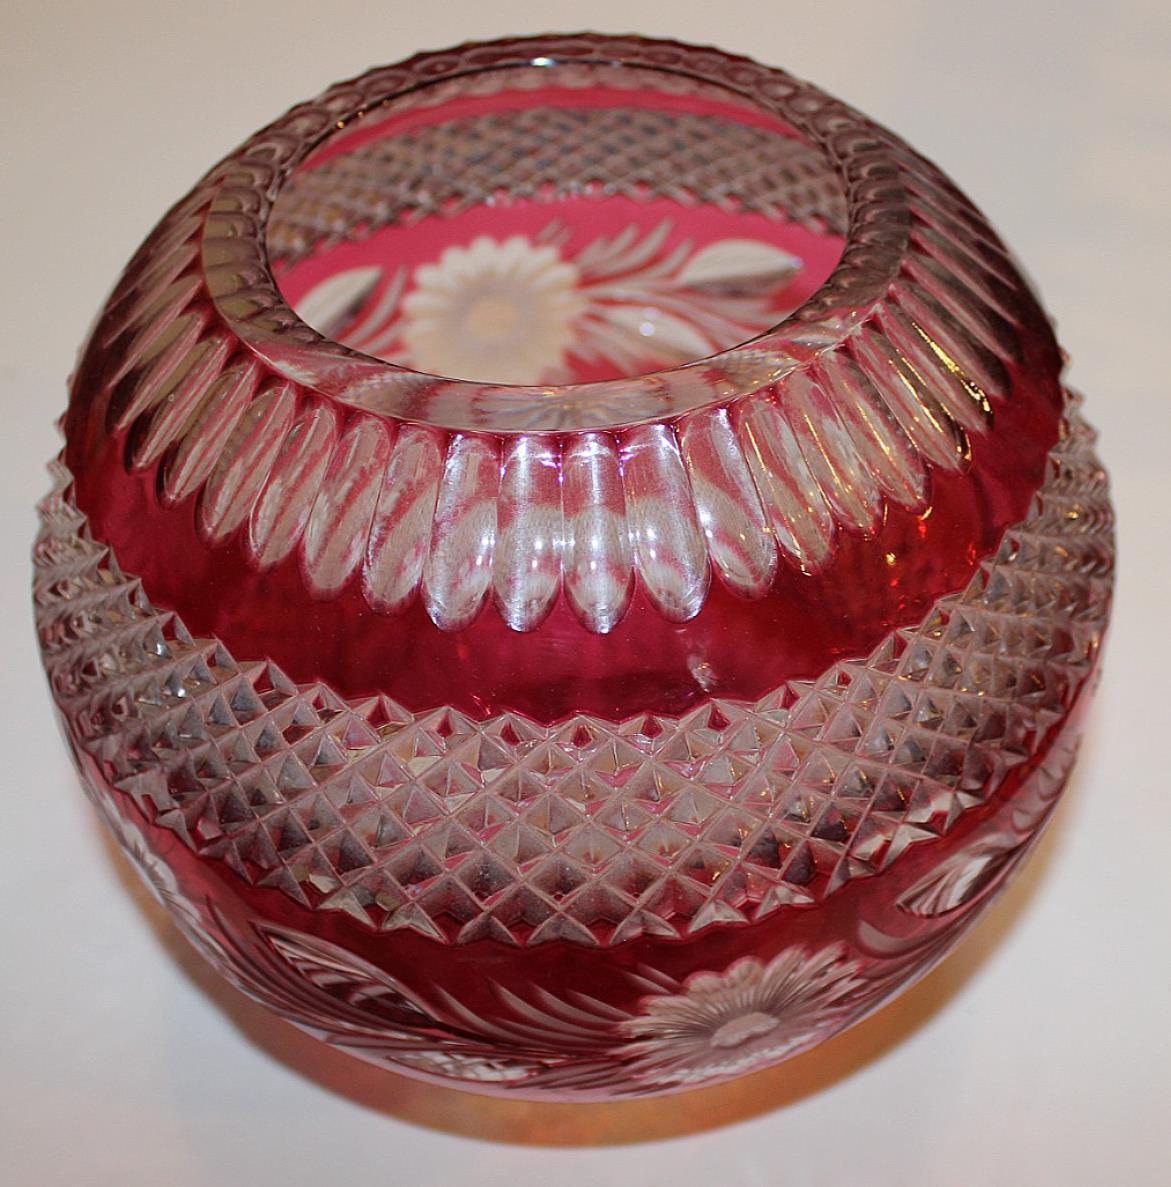 Vintage European Cut Crystal Ruby Cranberry Rose Bowl Vase Large Heavy